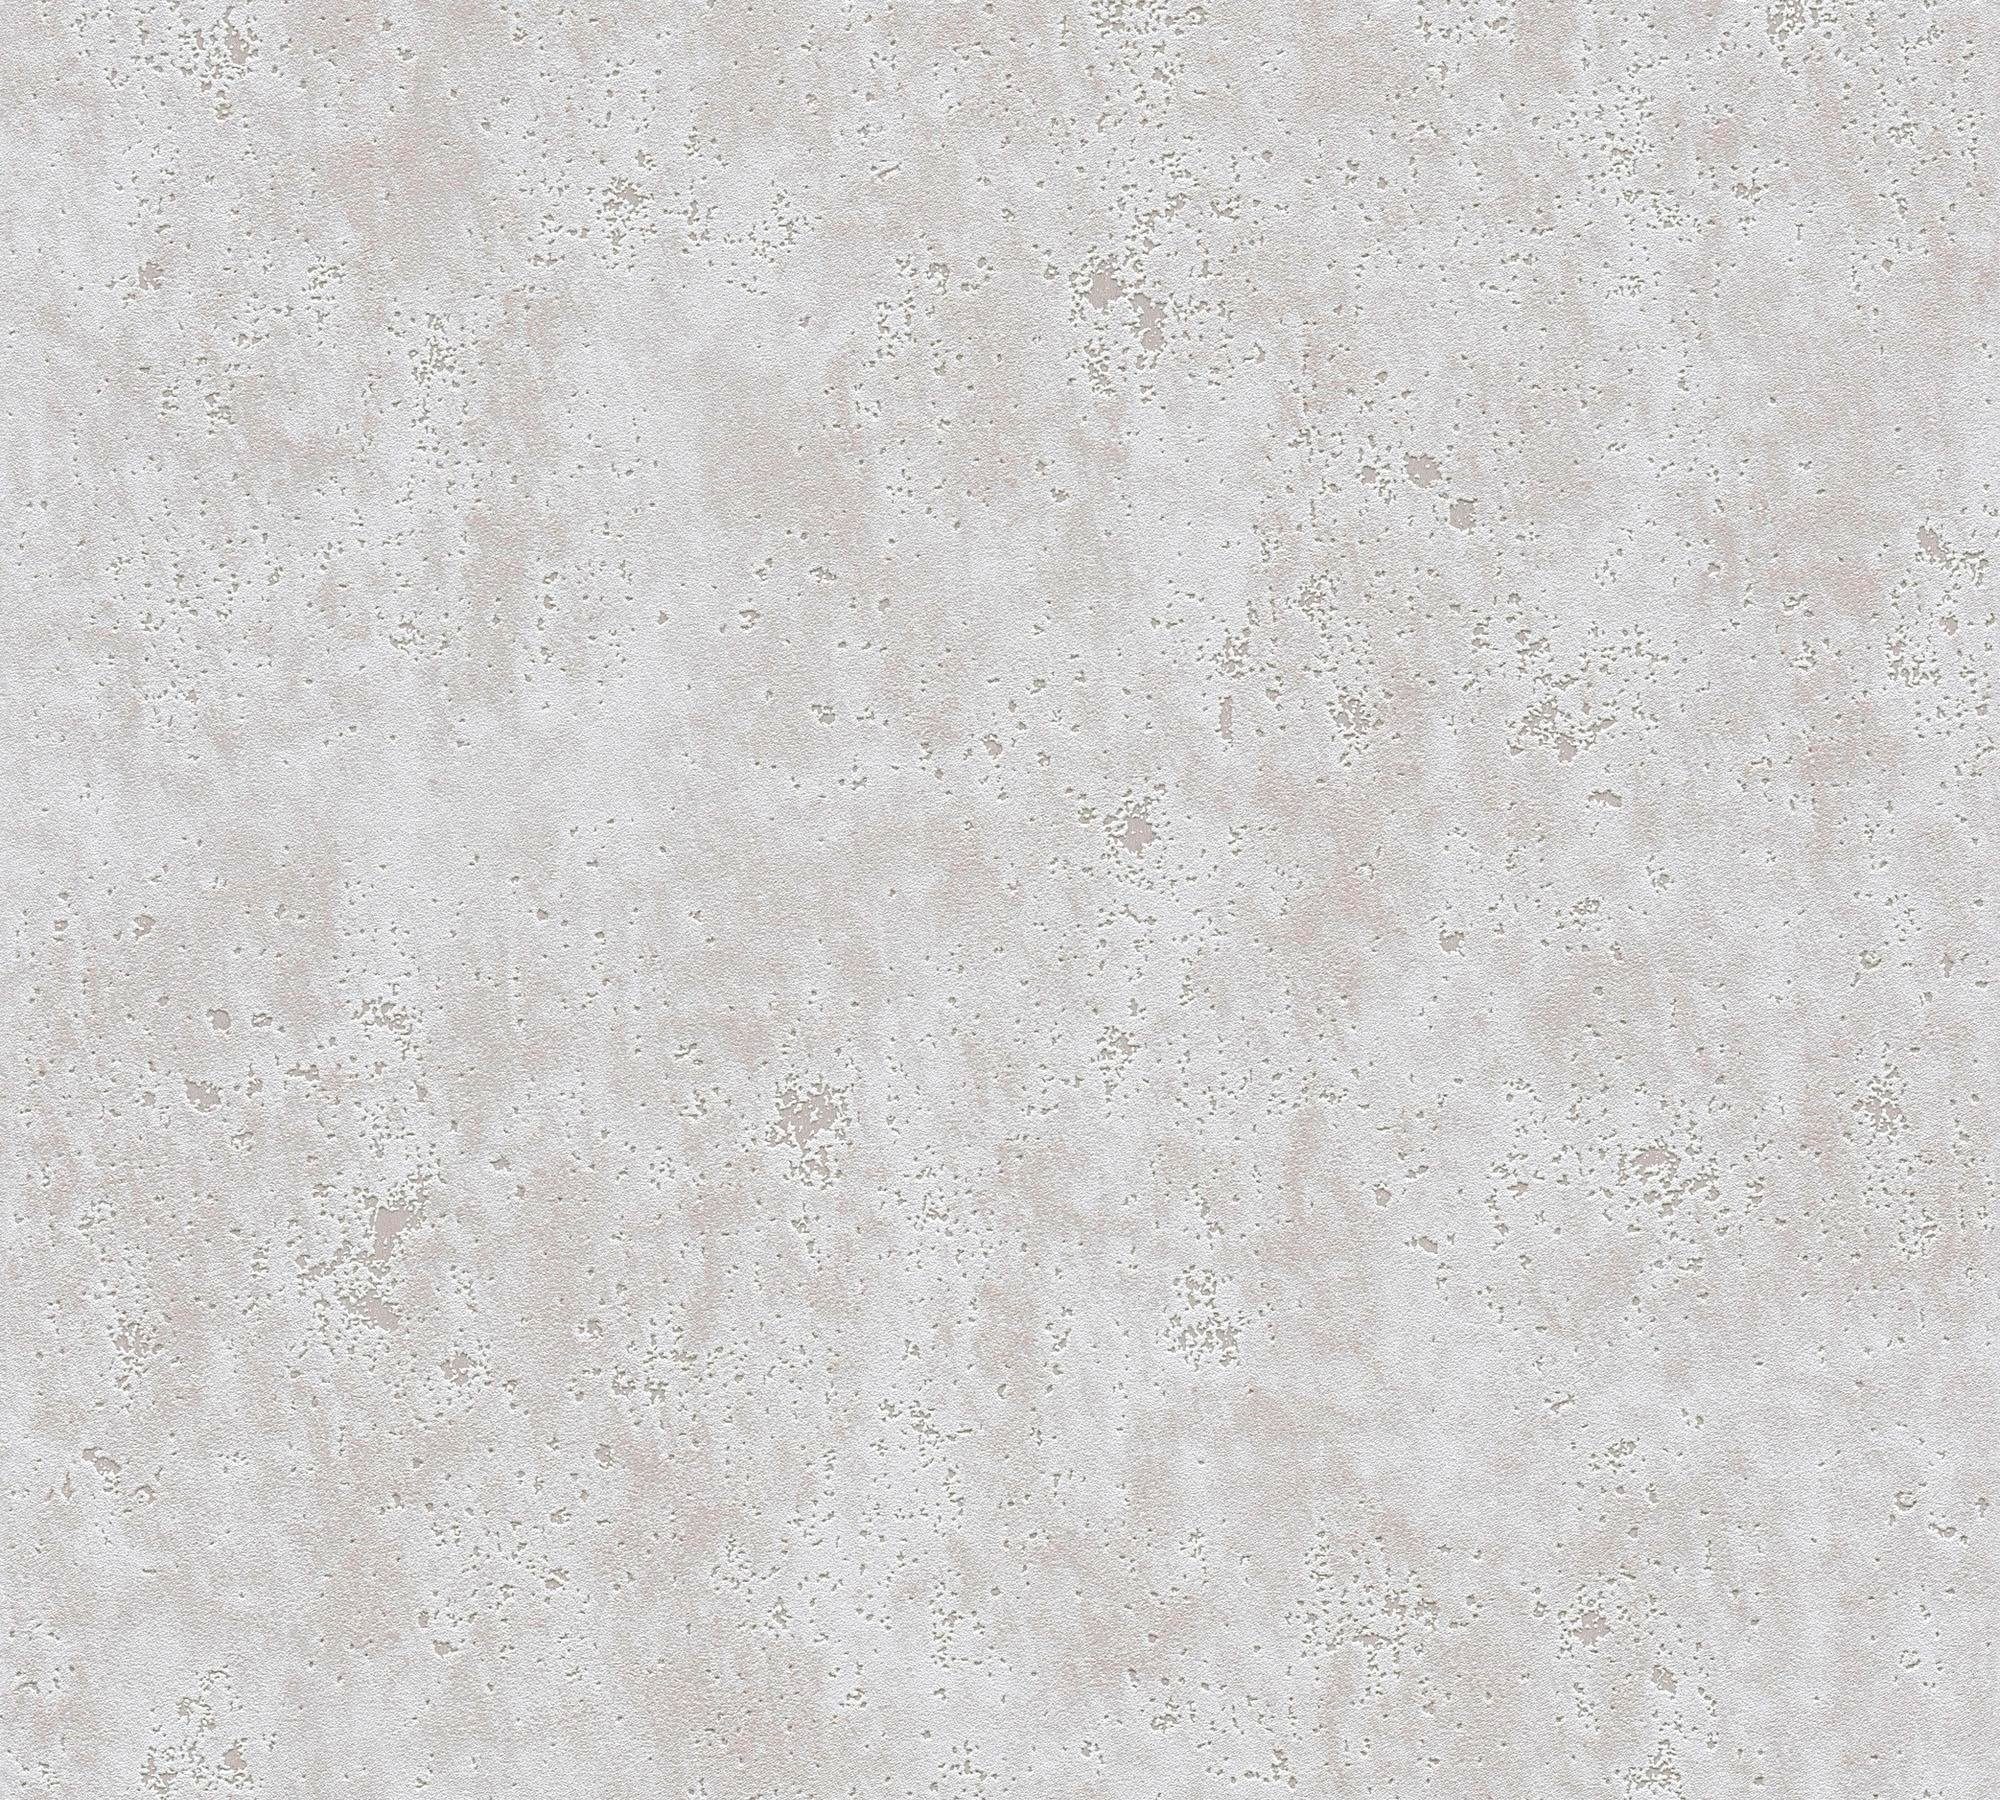 Grau Steinoptik, steinoptik glatt Vliestapete 2 matt, strukturiert, Création Attractive Grau,Hellgrau St), (1 loft A.S. strukturtapete Unitapete Tapete steinwand